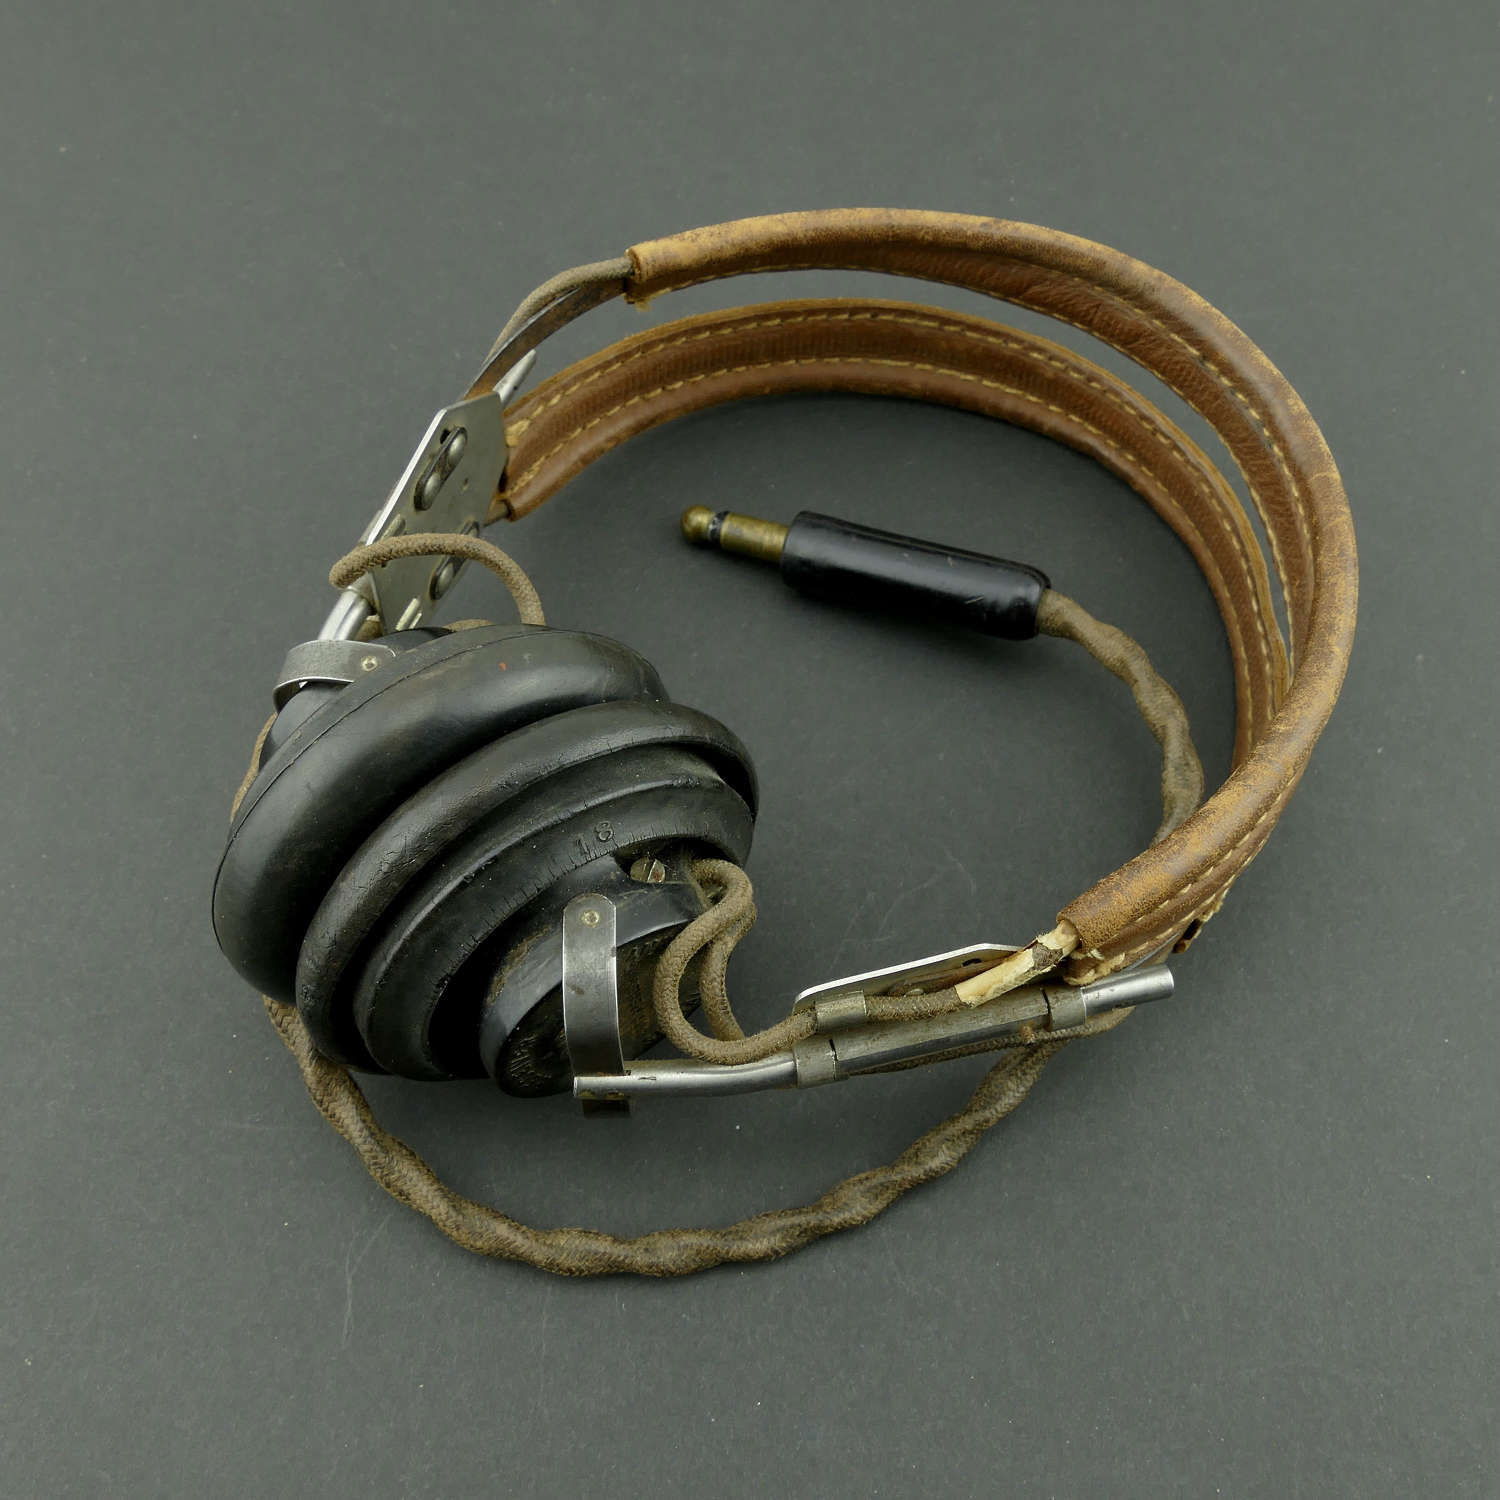 USAAF HS-23 headset